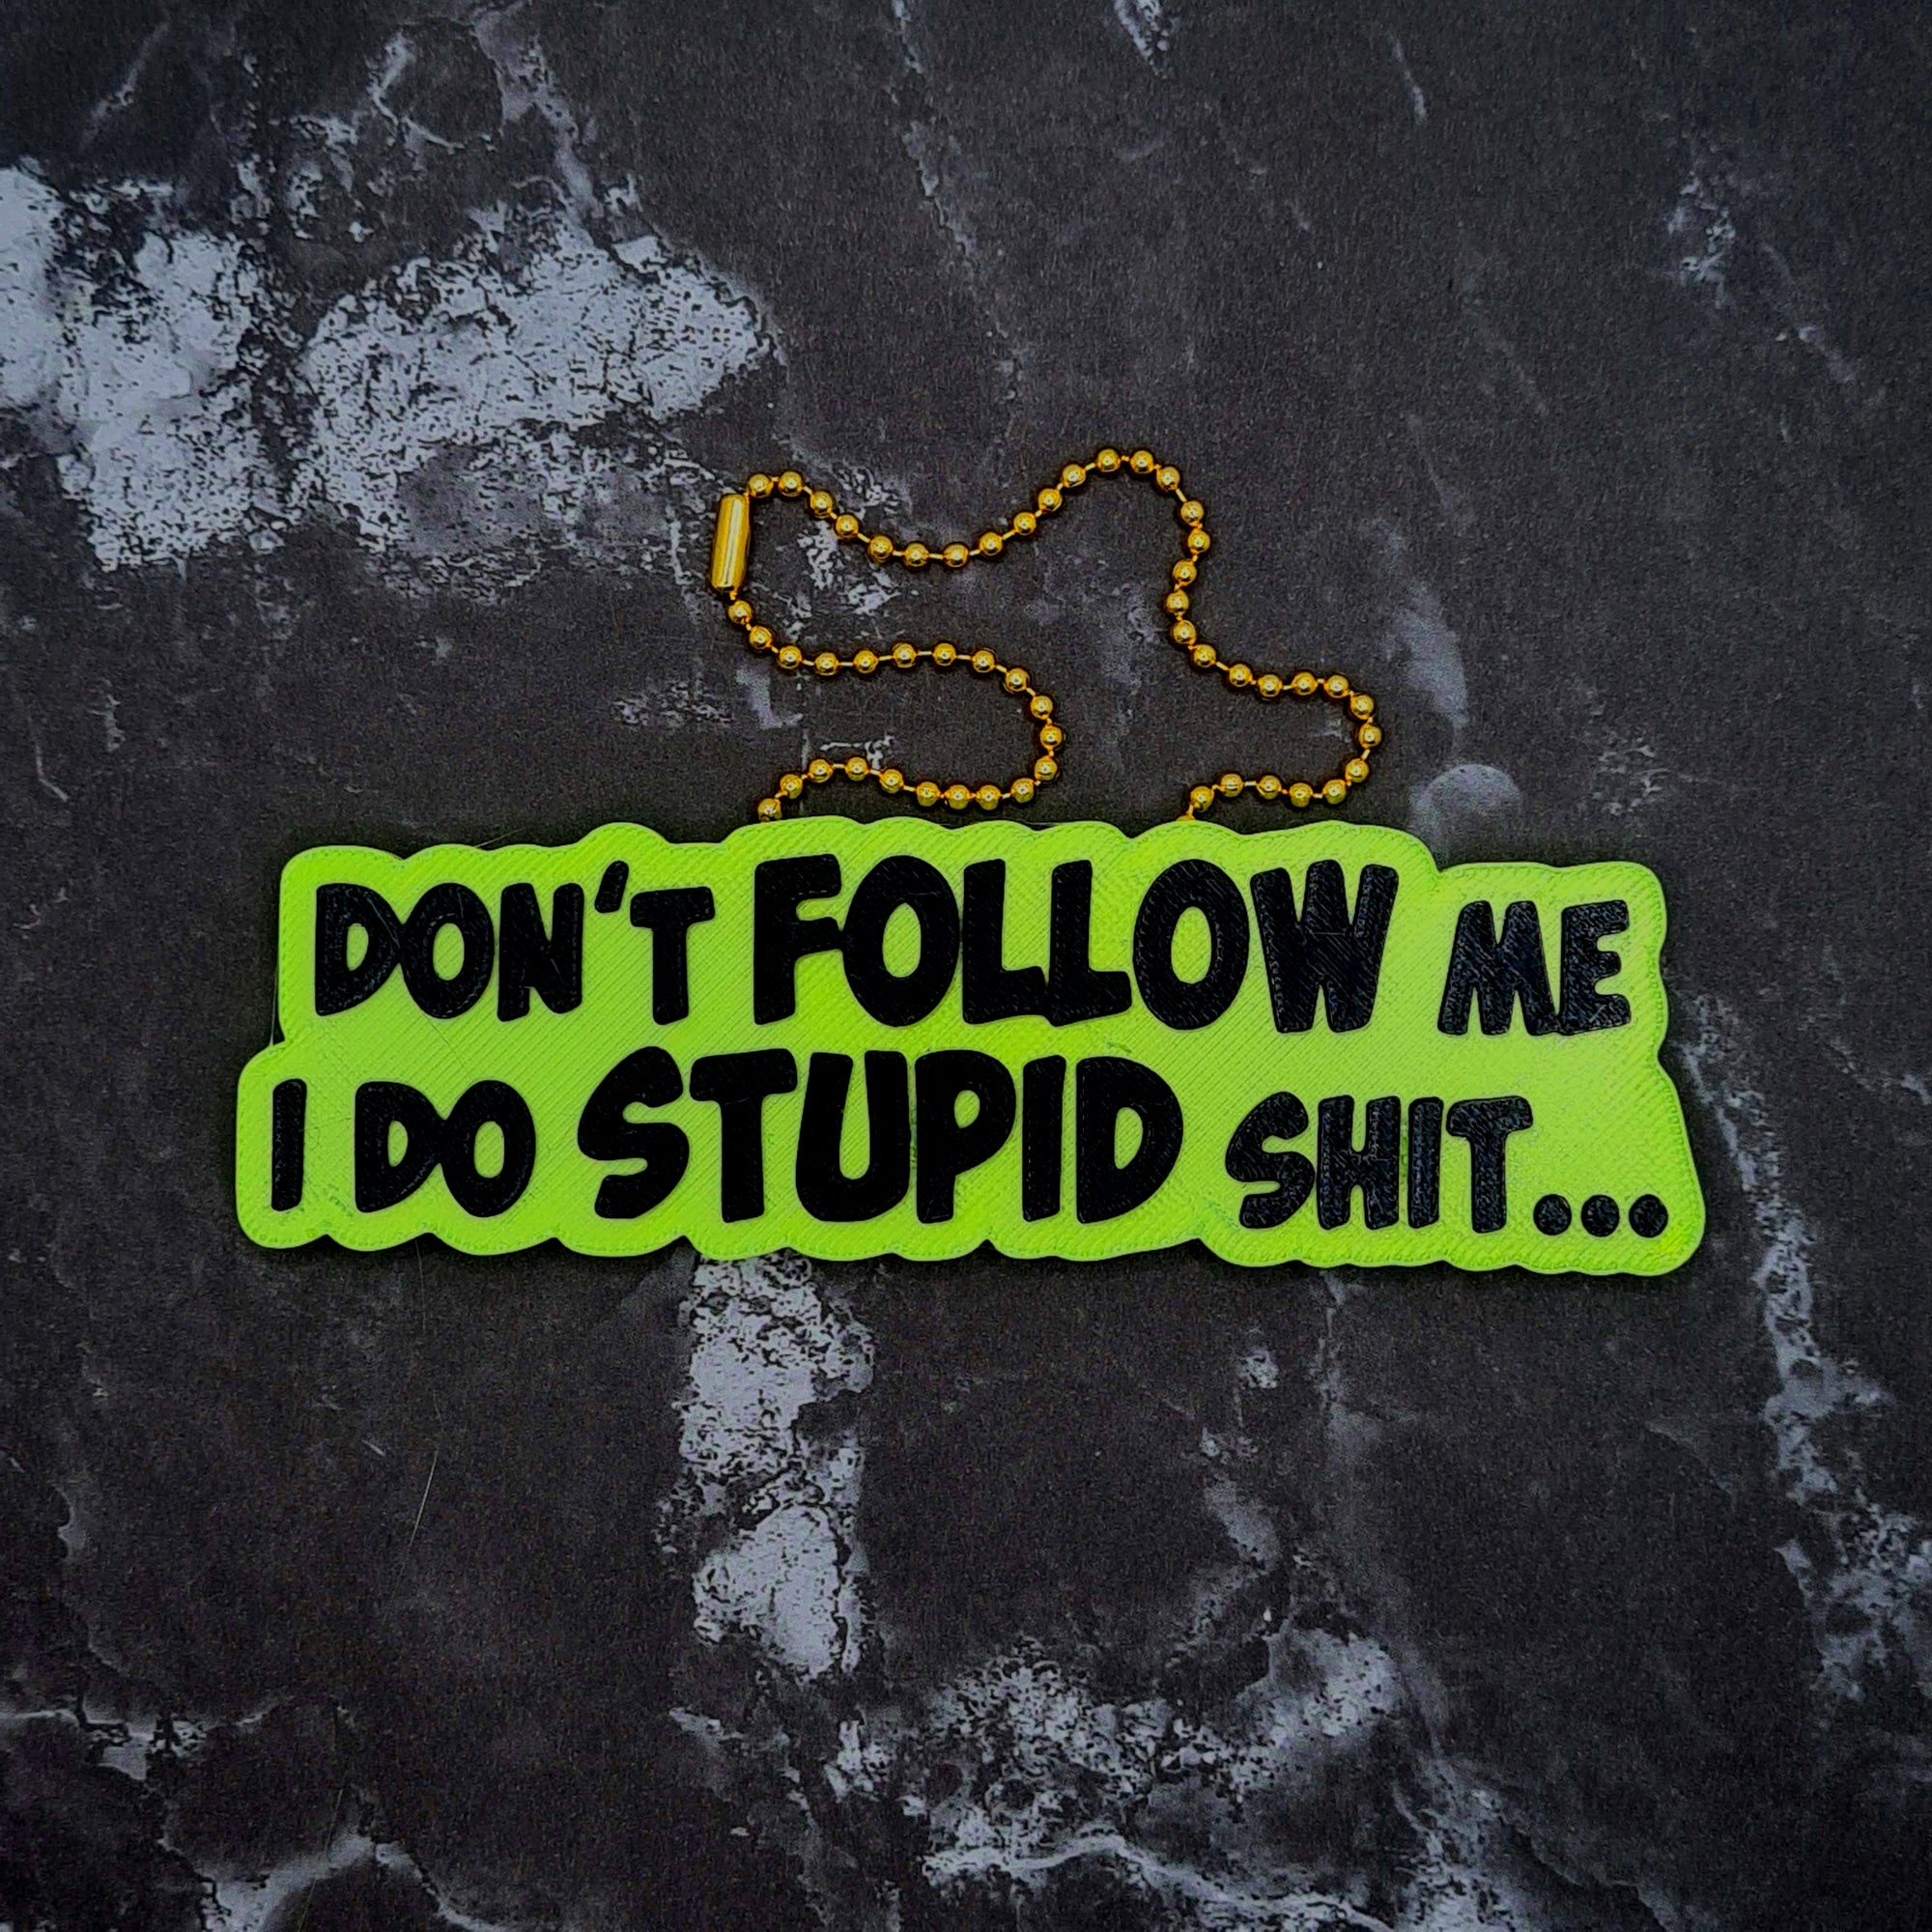 Don't Follow Me, I do Stupid Shit Charm!